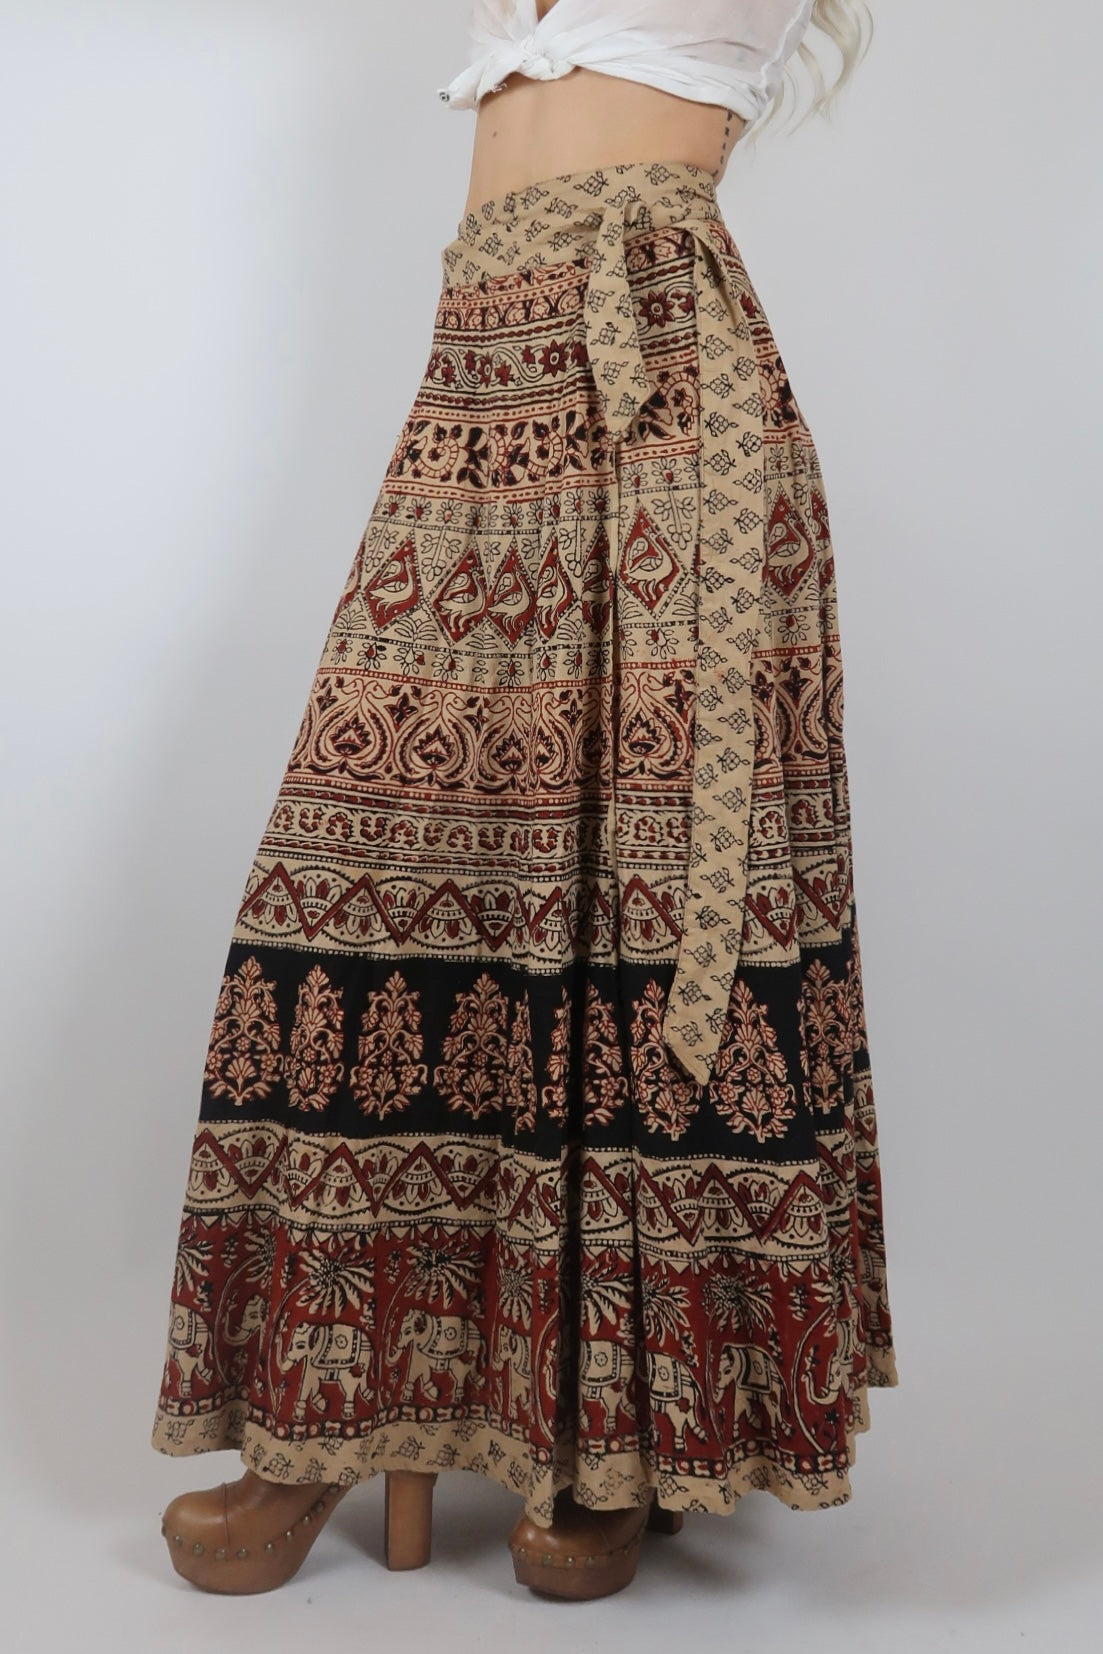 1970s Indian wrap skirt